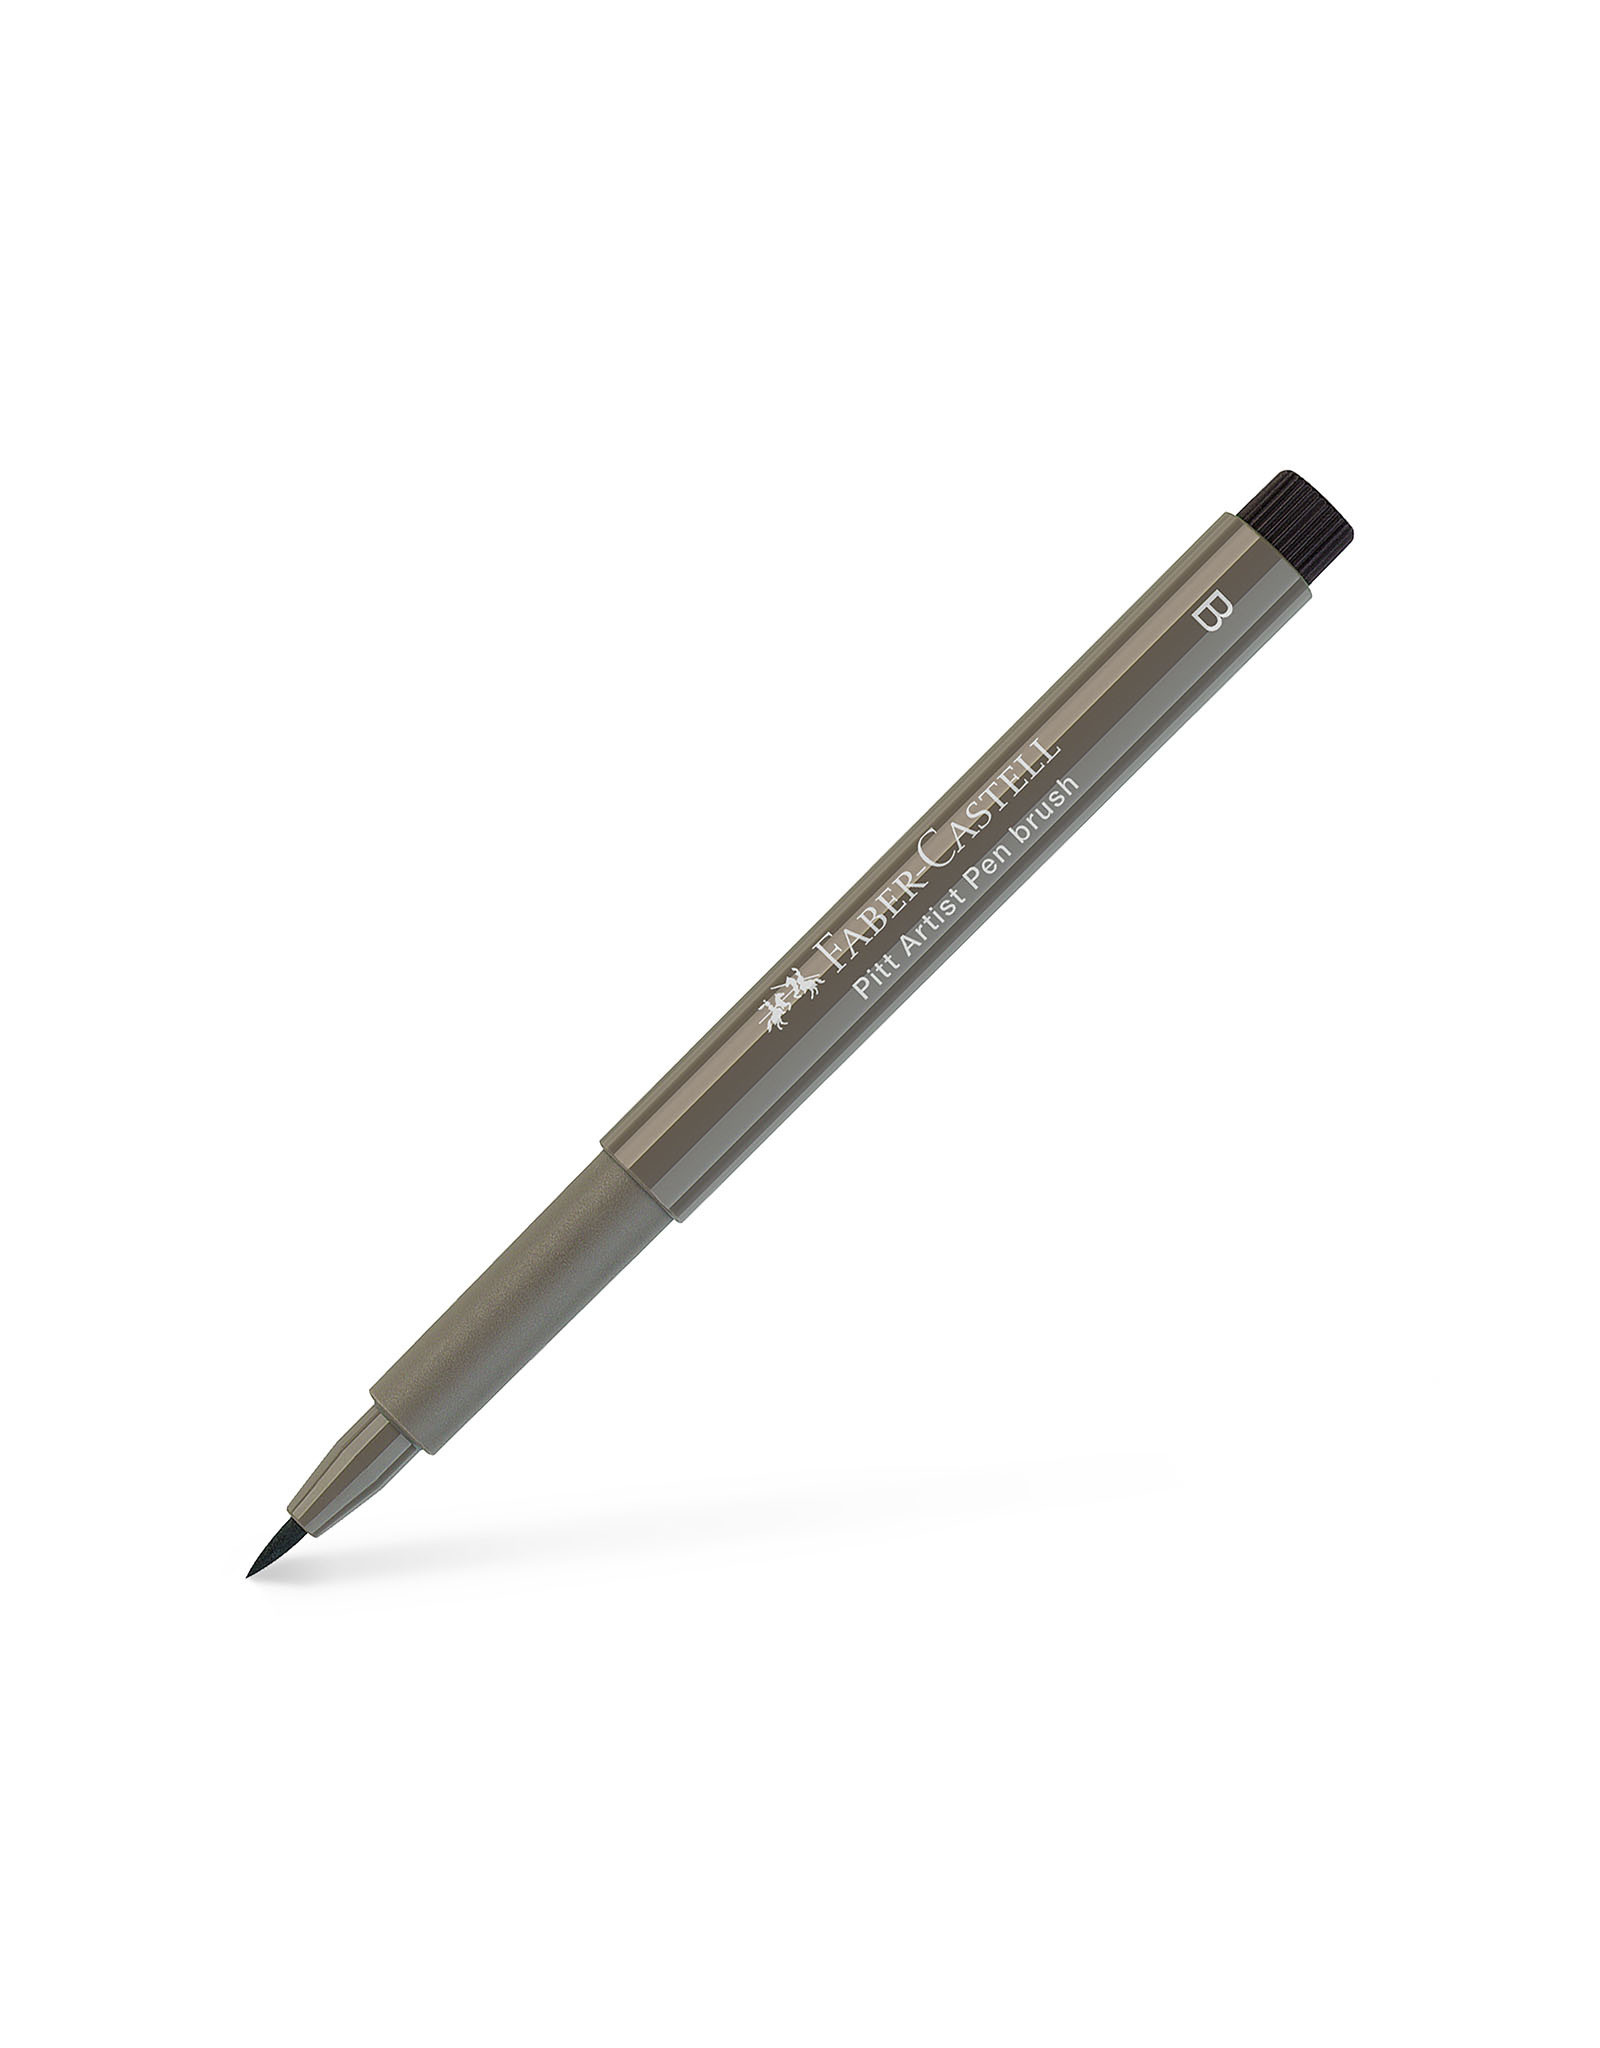 FABER-CASTELL Pitt Artist Pen, Brush, Warm Grey IV